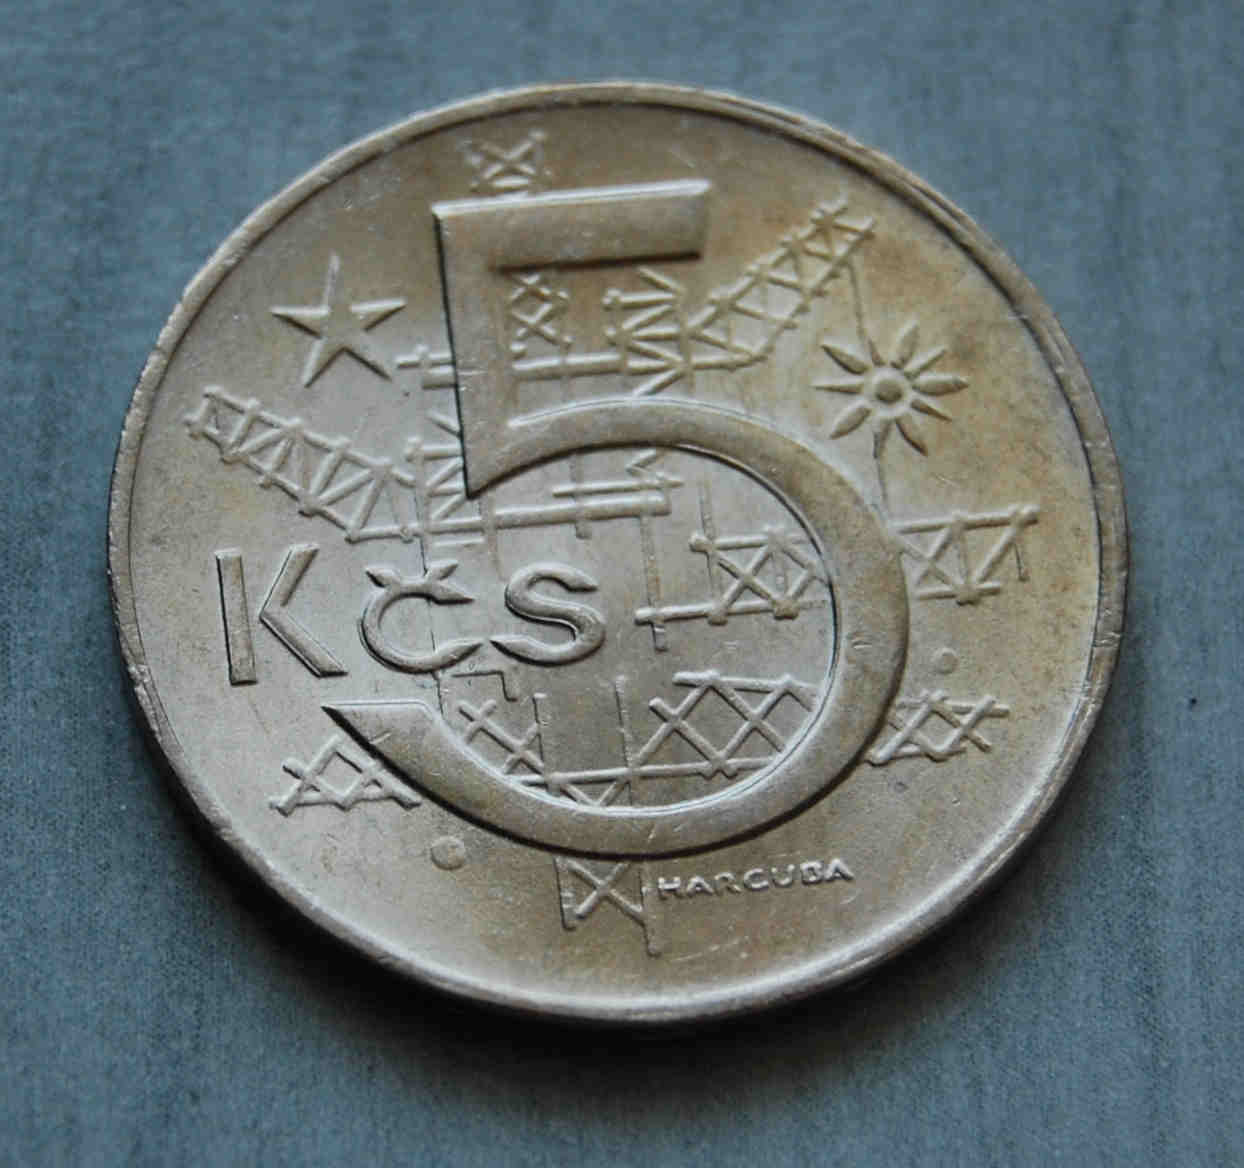  Tschekoslowakei 5 Kronen 1974 KM # 60 Variante überlange 4   